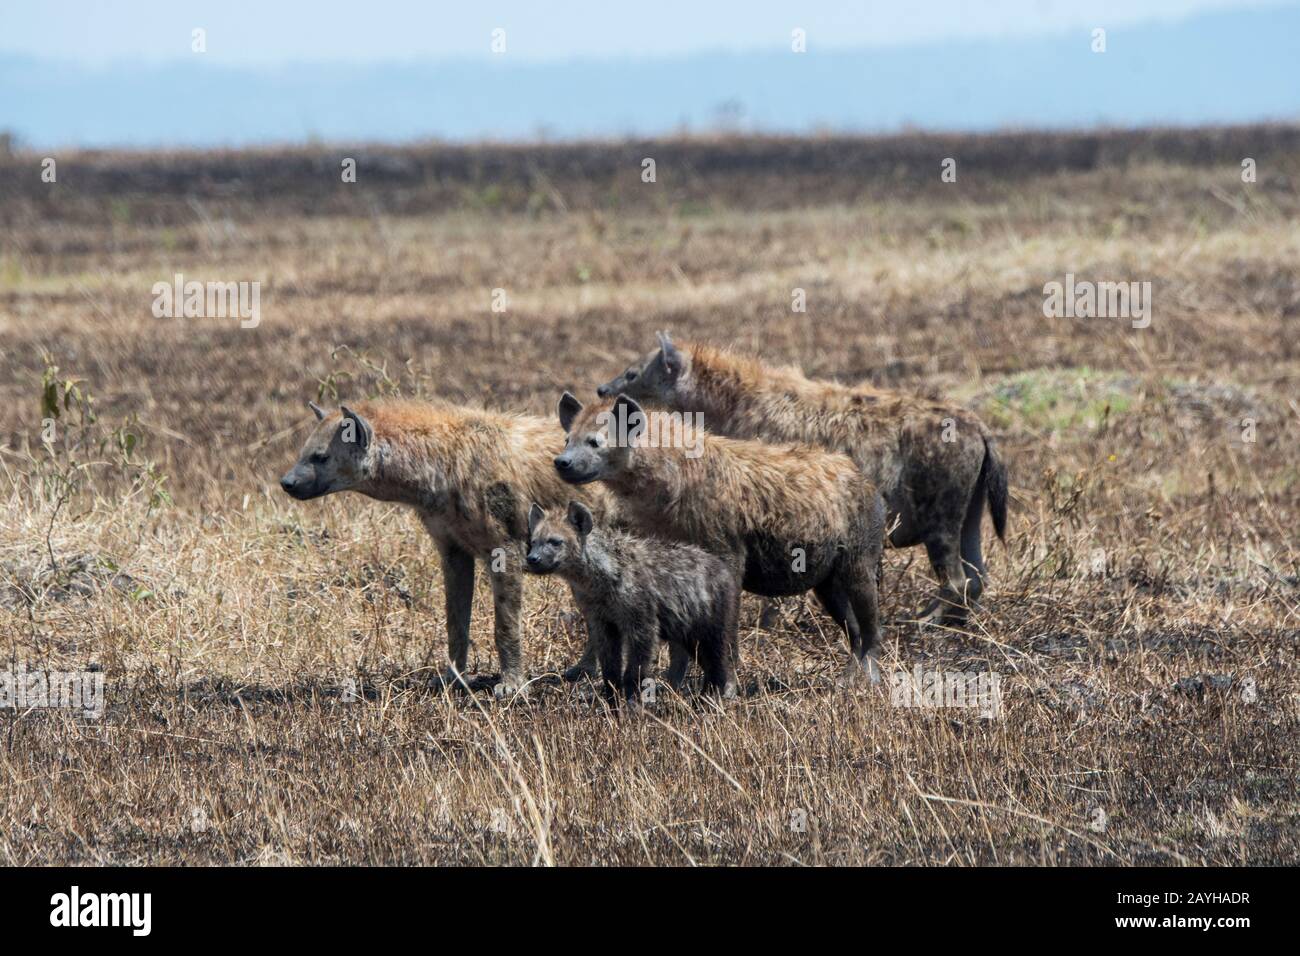 A clan of spotted hyenas (Crocuta crocuta) in the Masai Mara National Reserve in Kenya. Stock Photo